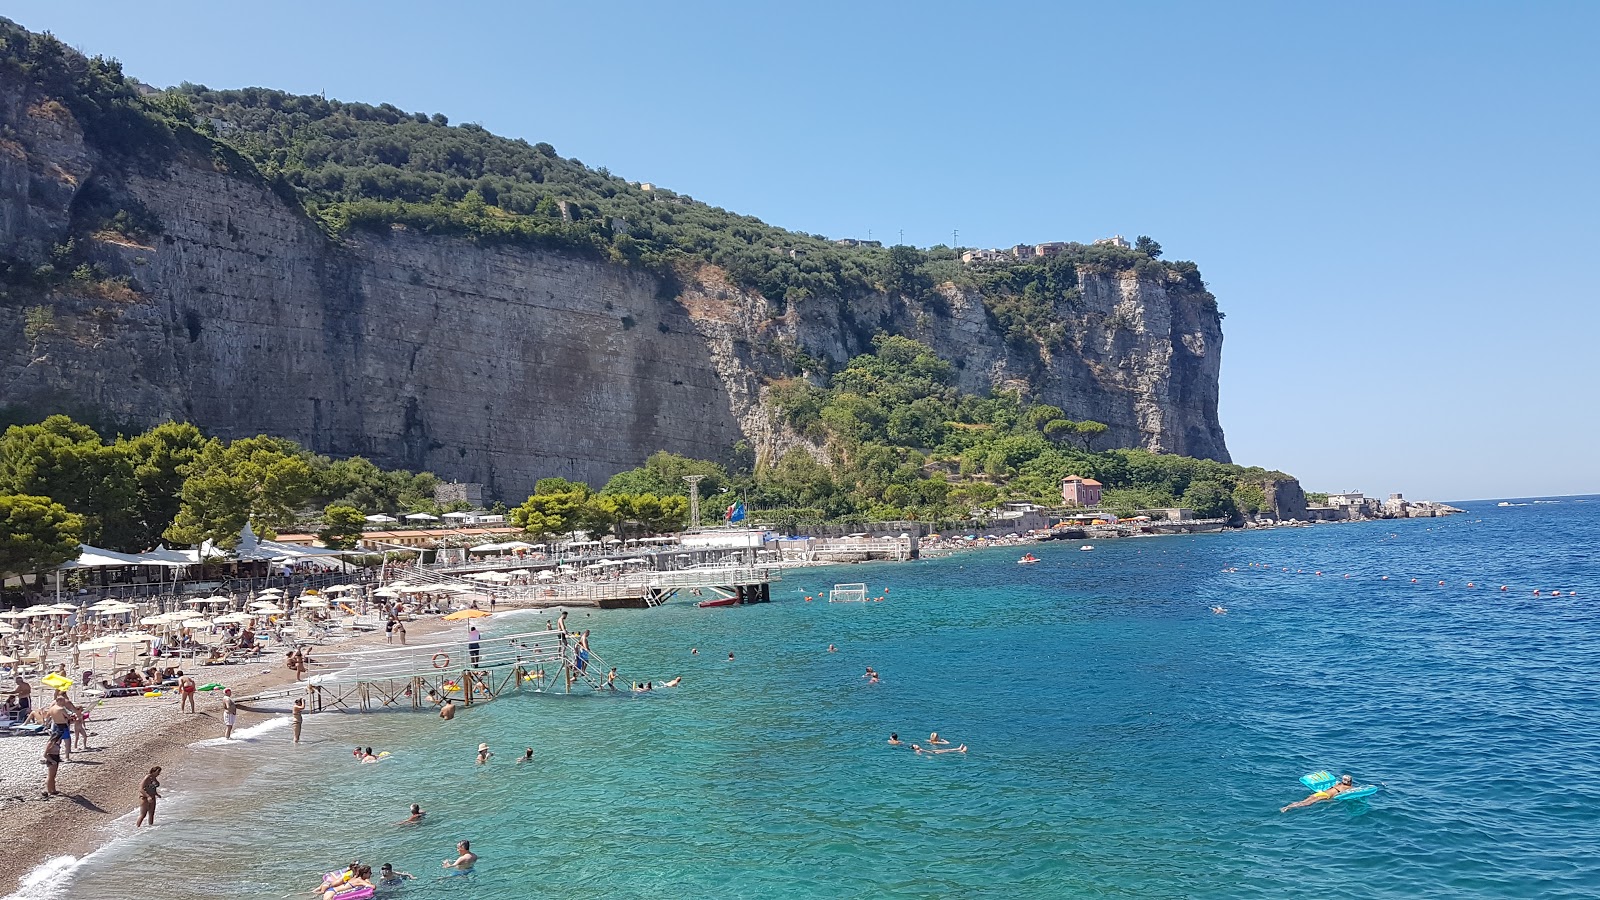 Spiaggia Seiano'in fotoğrafı gri ince çakıl taş yüzey ile